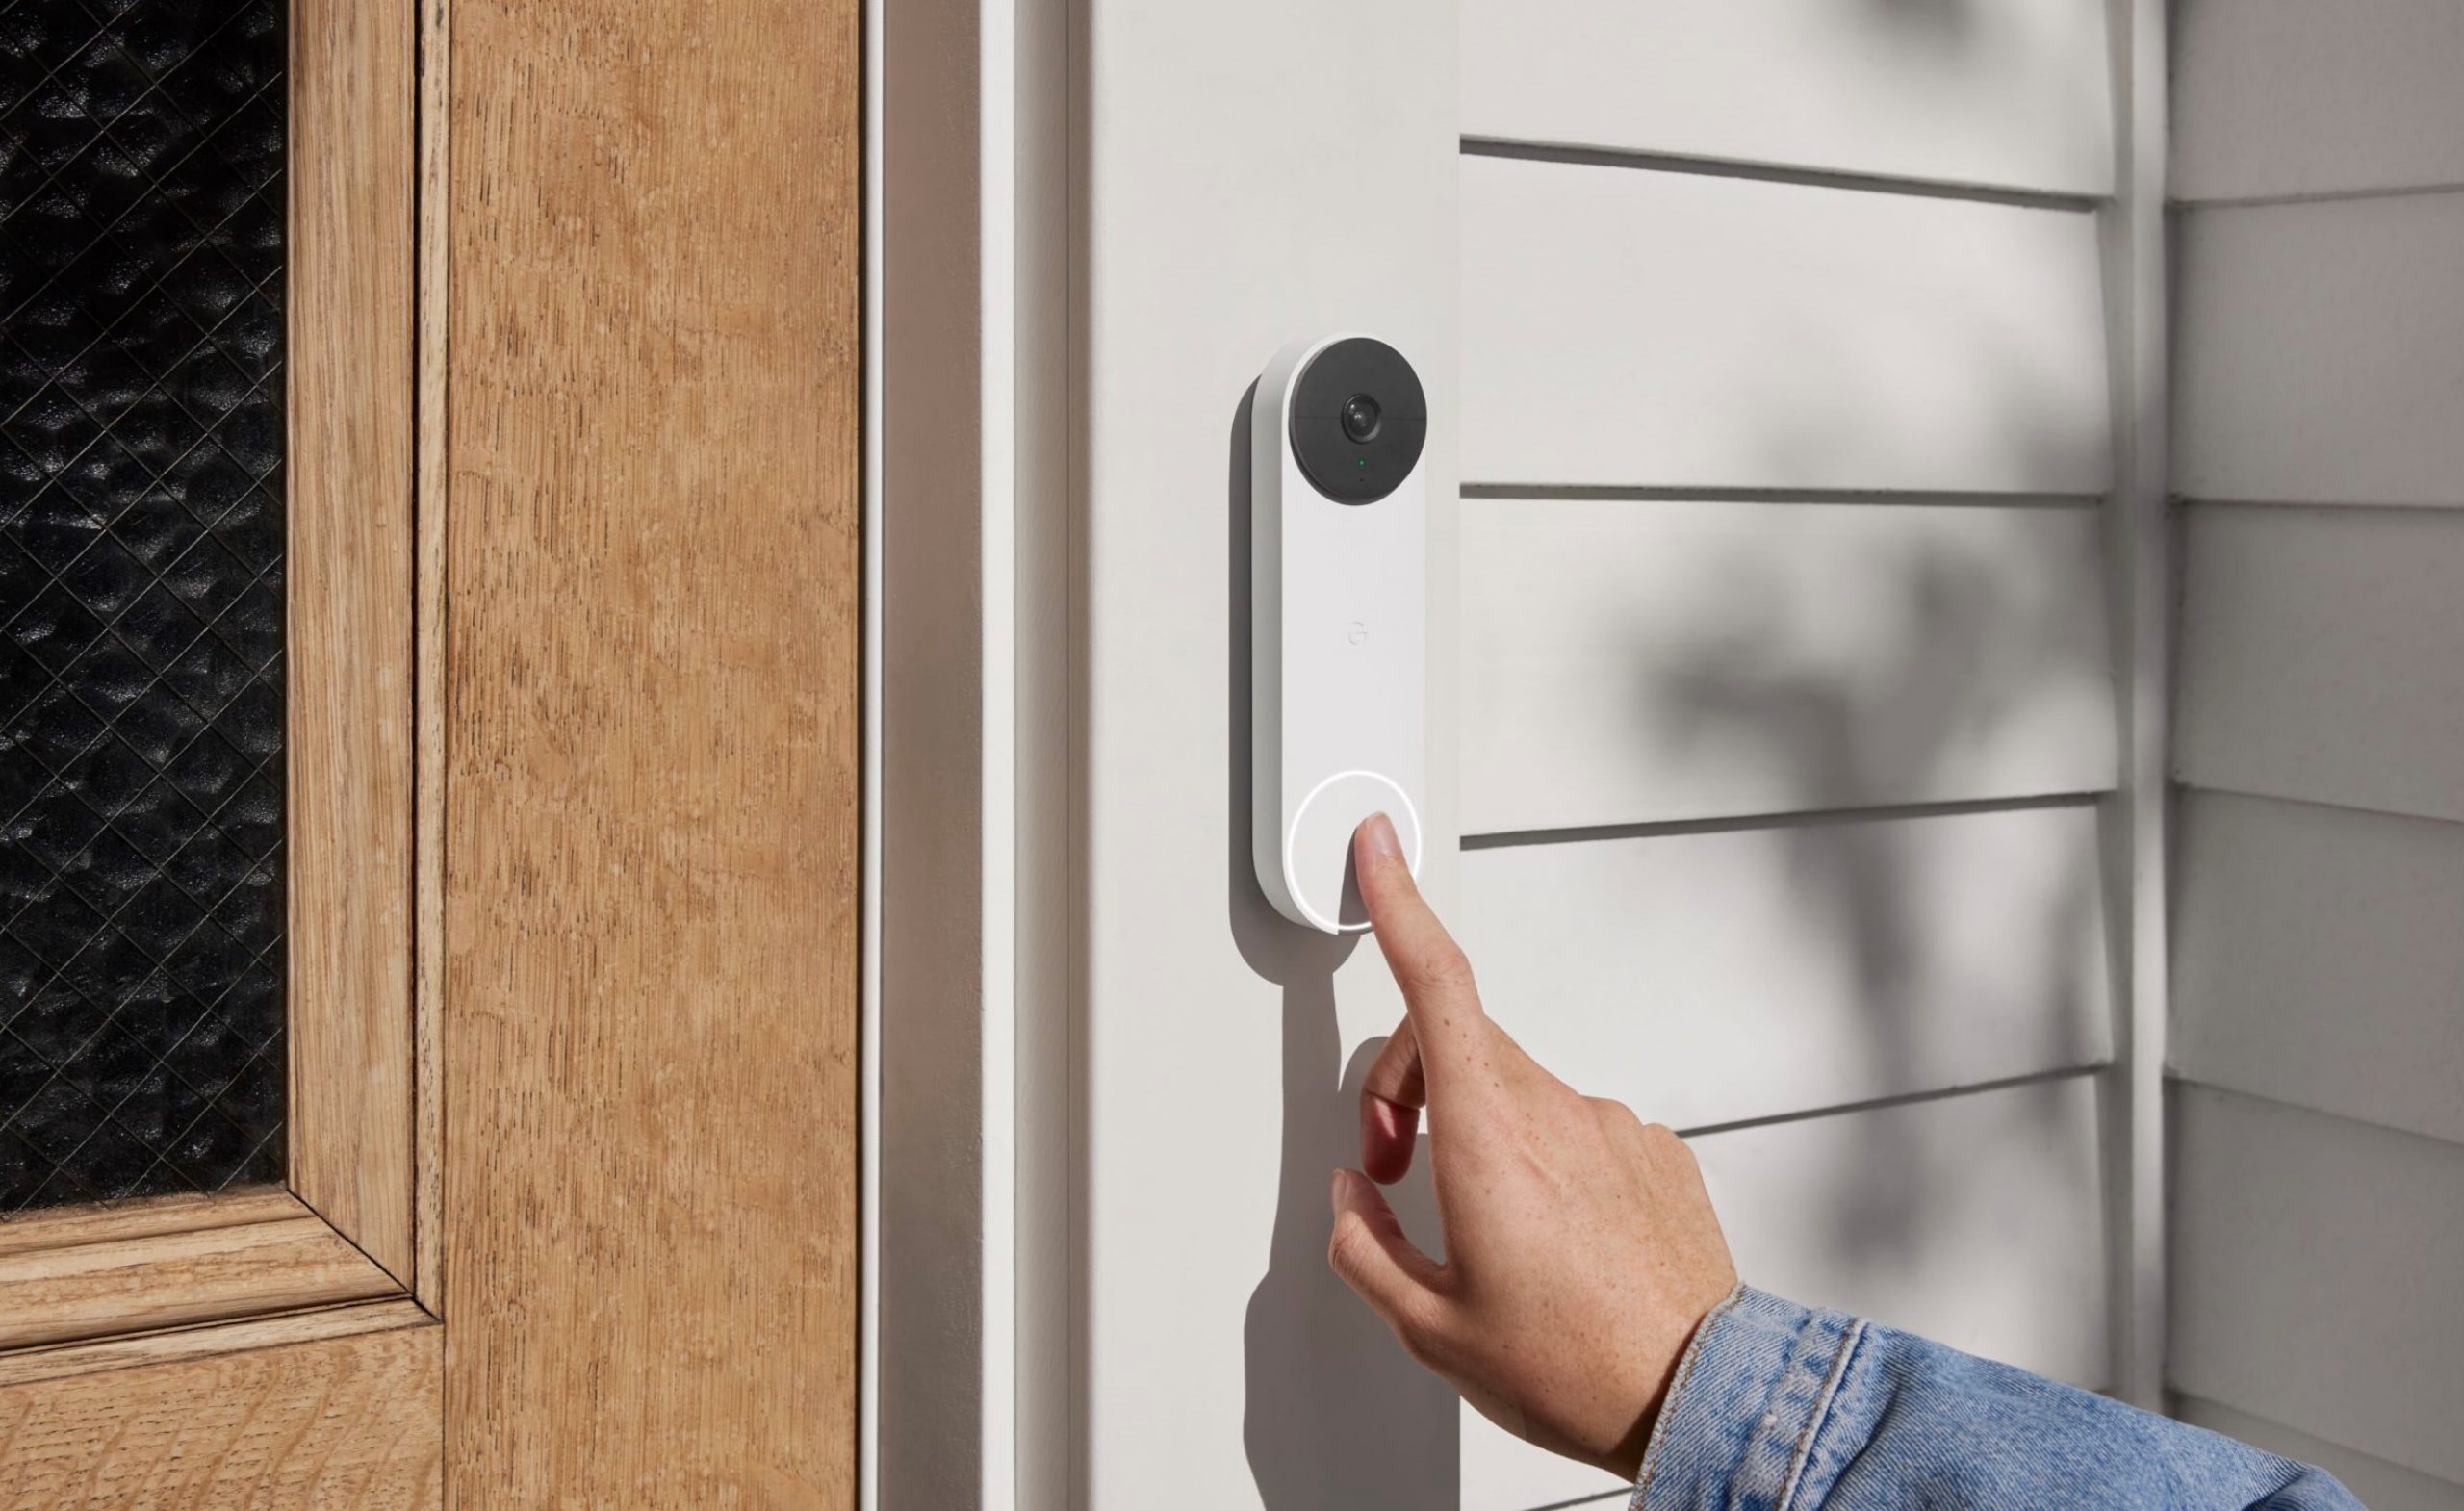 Google Nest Doorbell (Battery) – friend or foe (security review